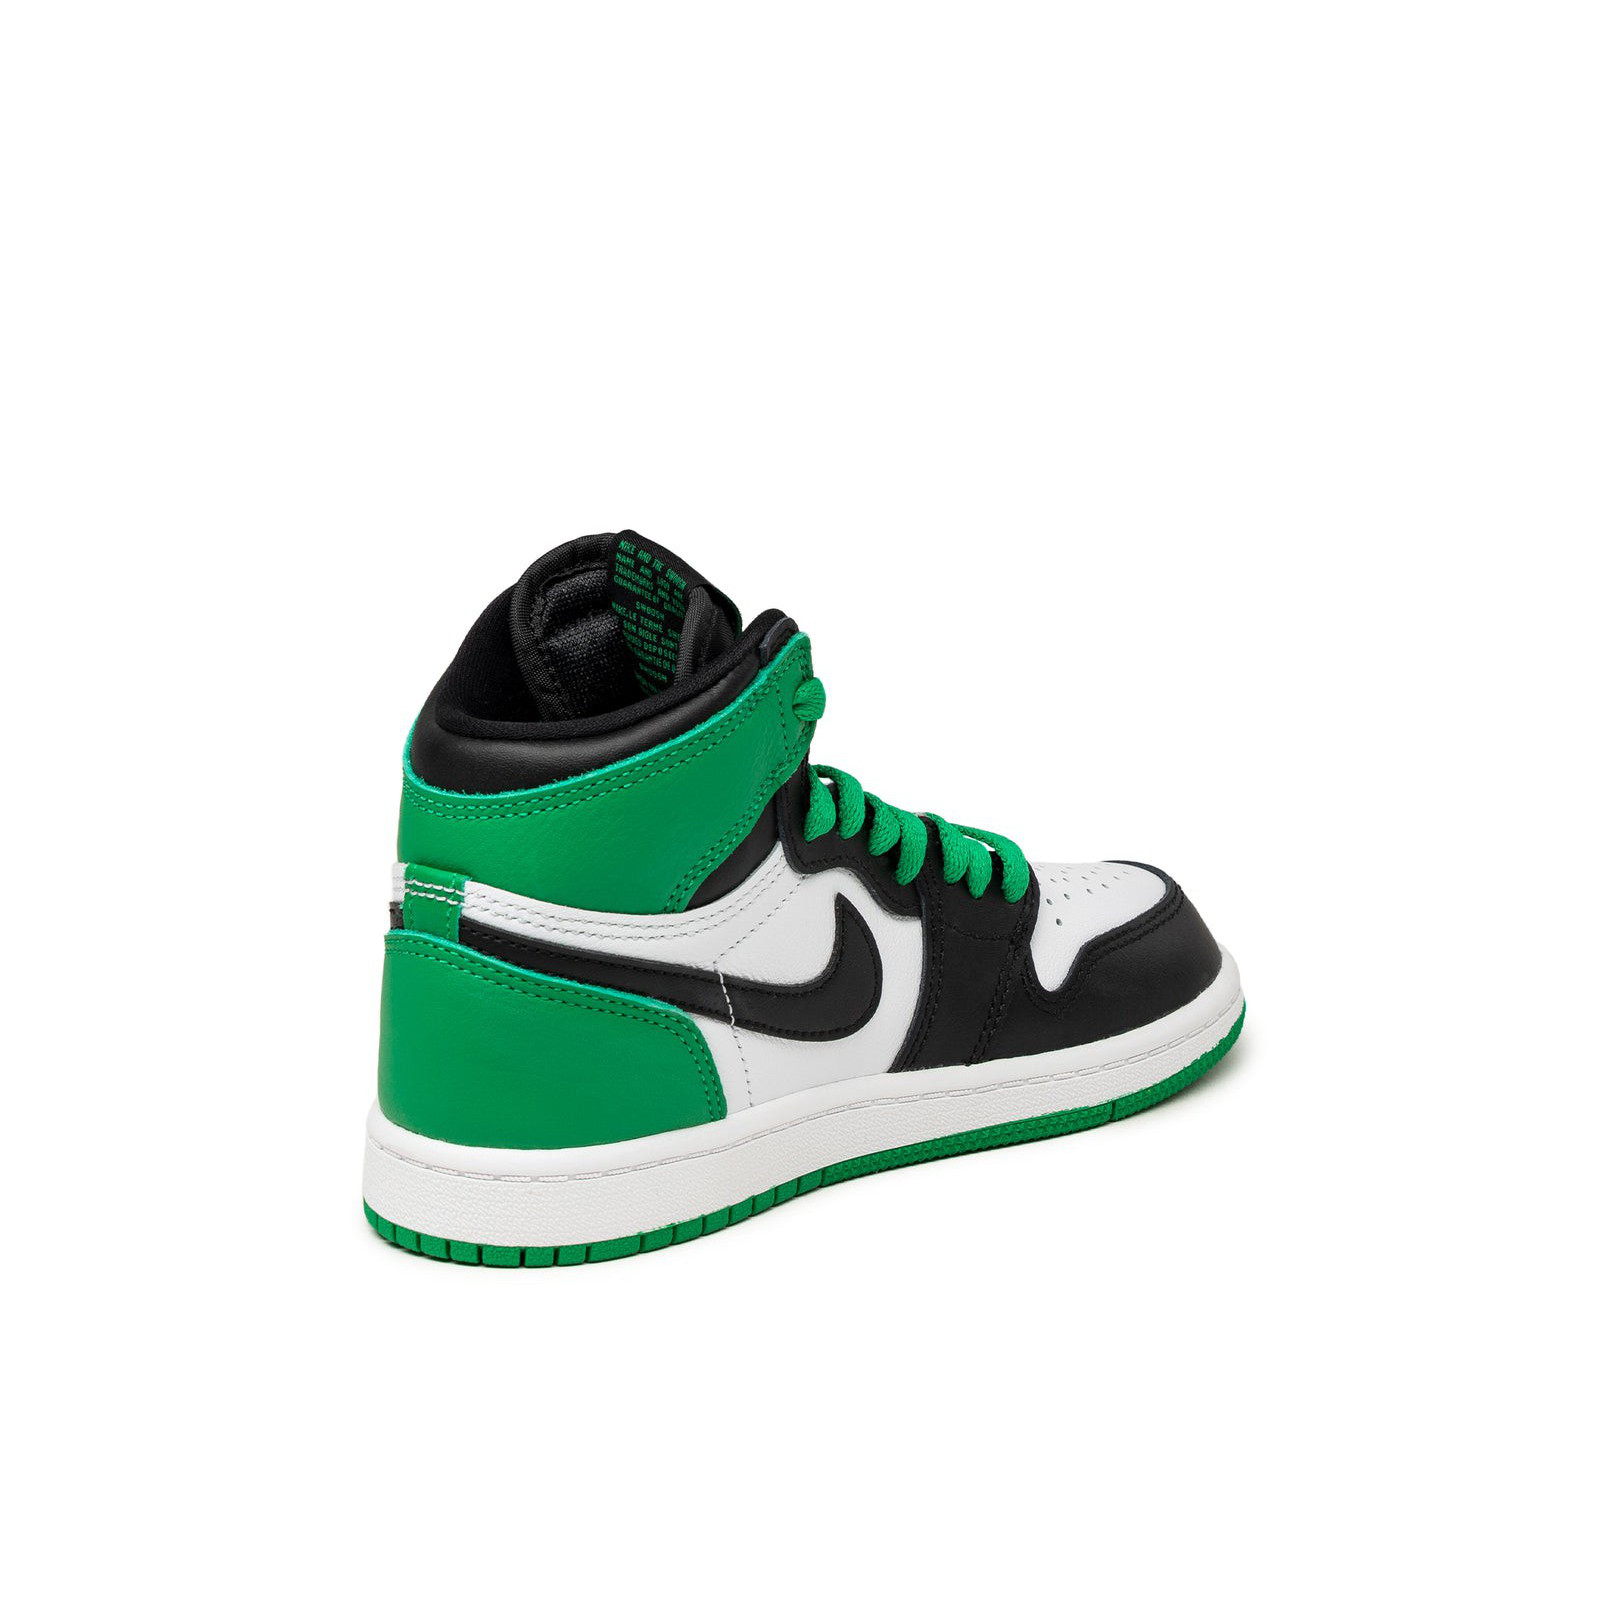 Air Jordan 1 Mid (PS)
« Lucky Green »